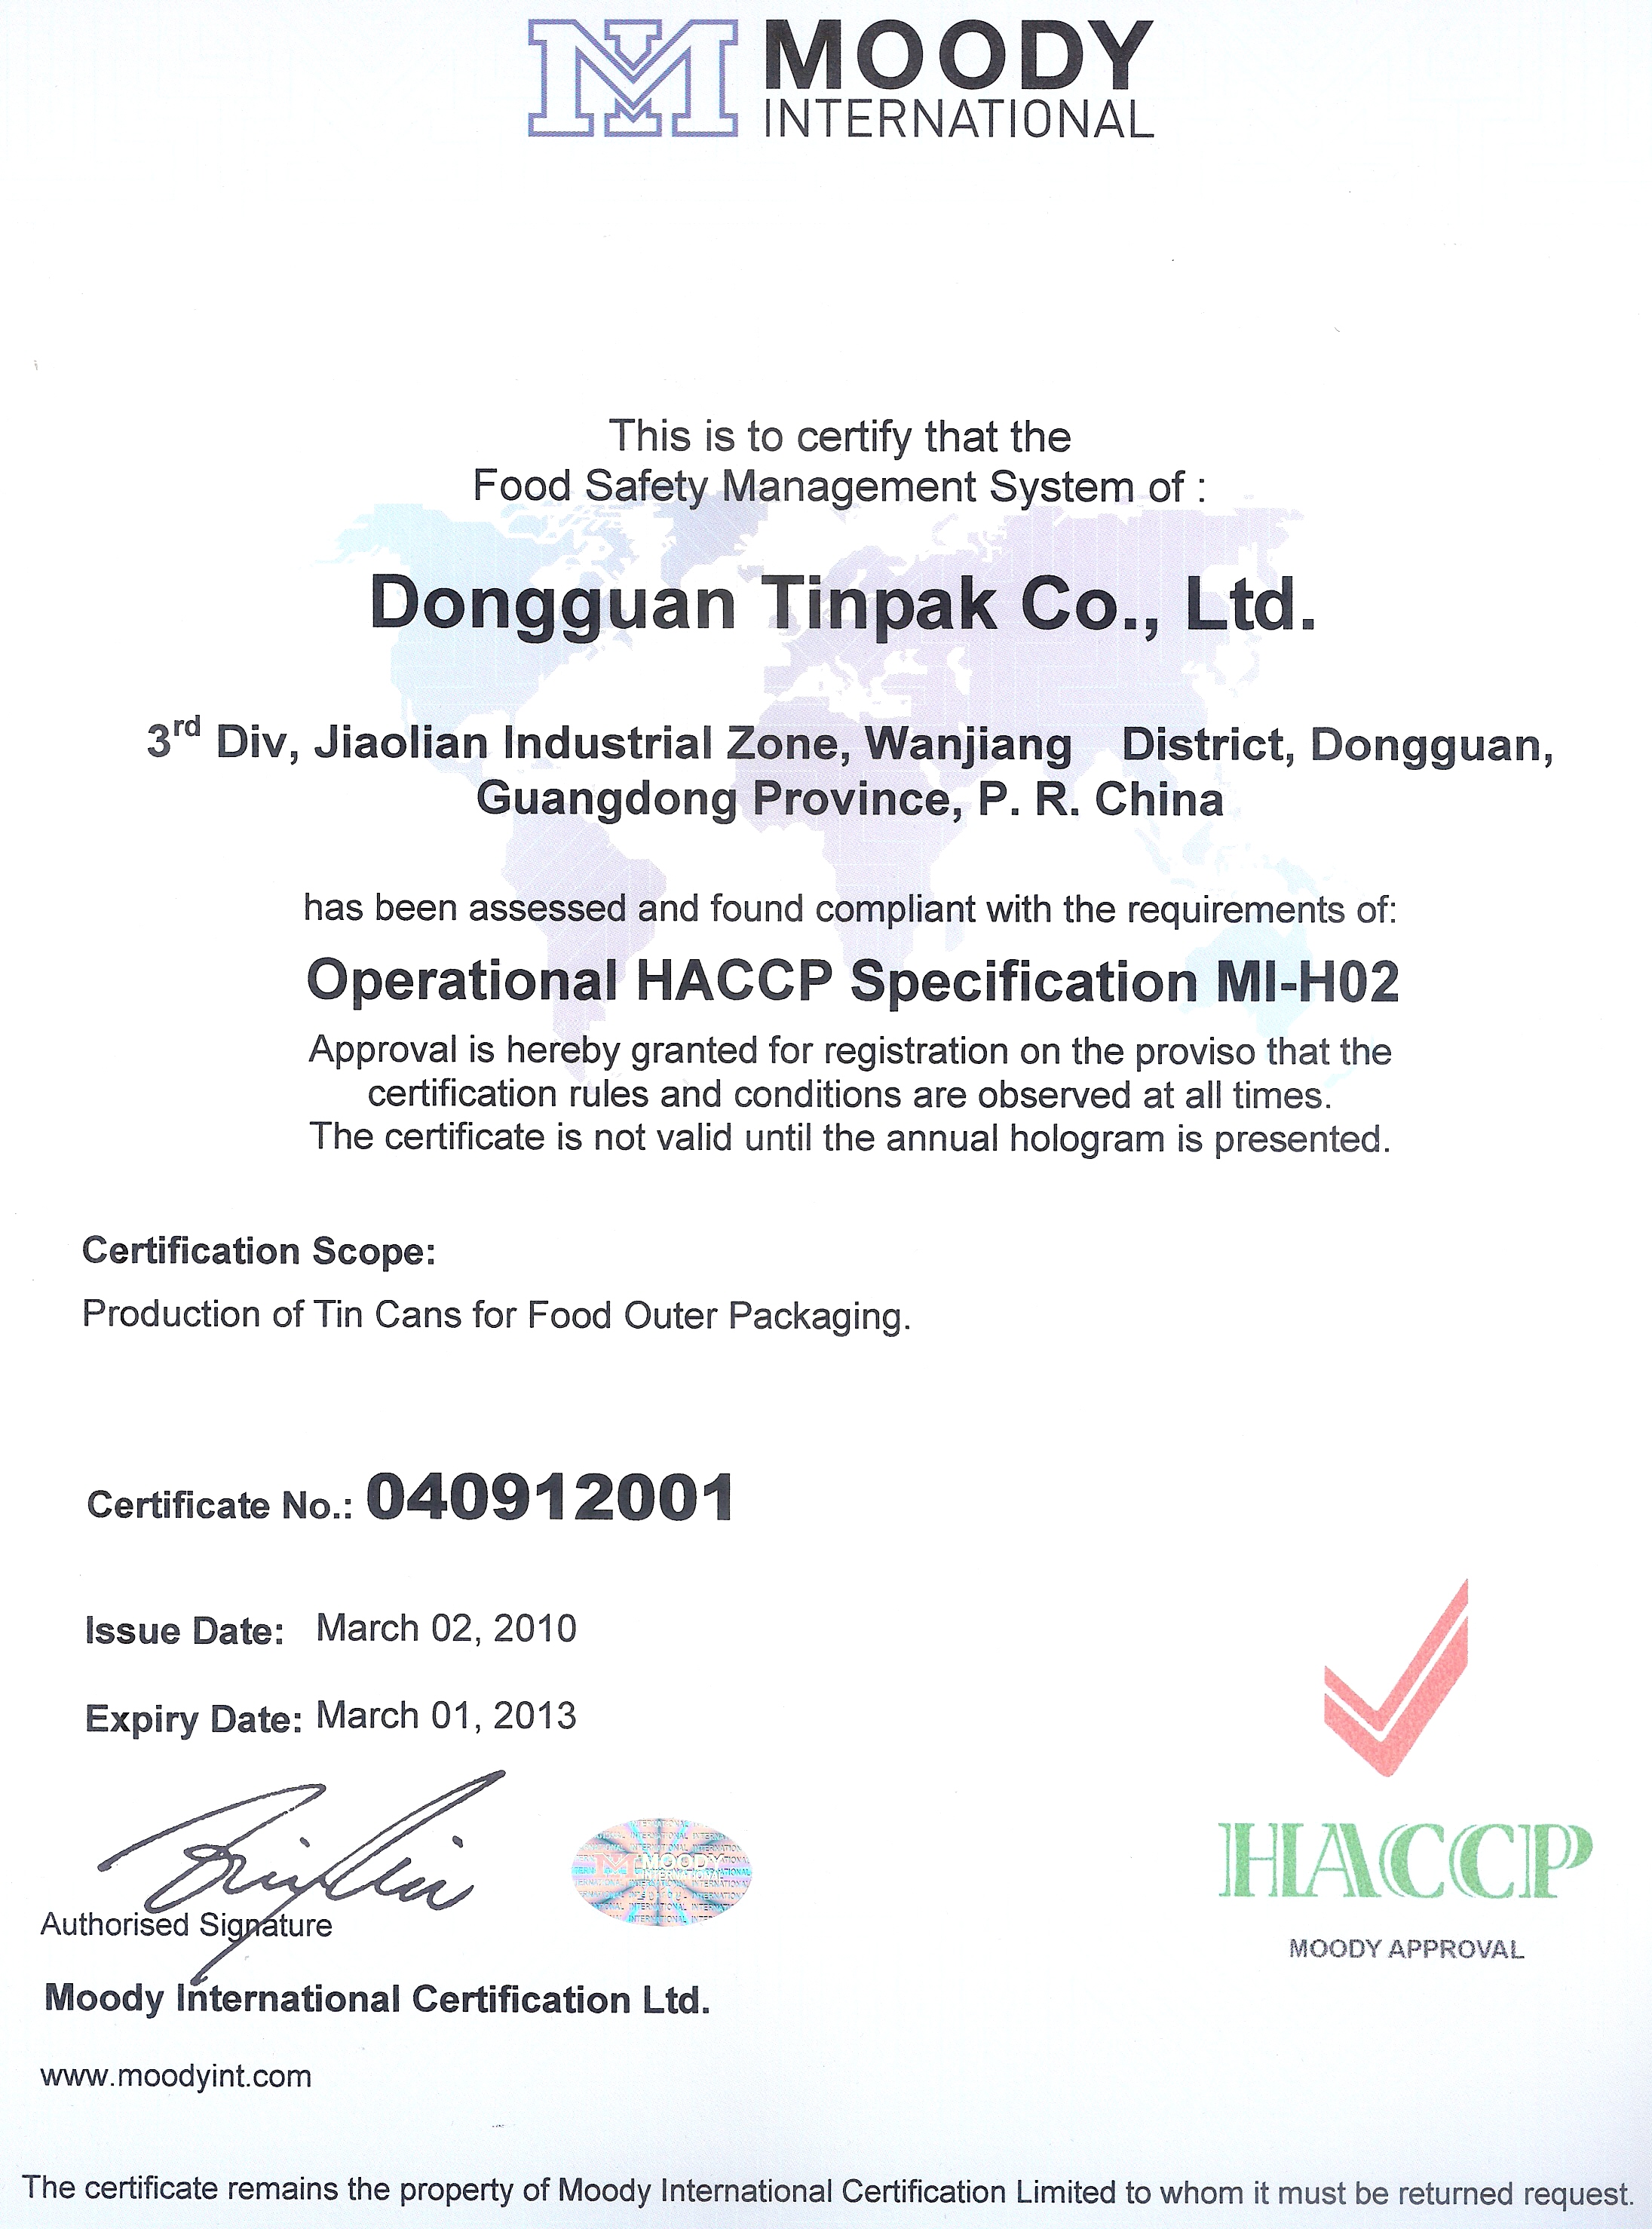 HACCP certified tin box company